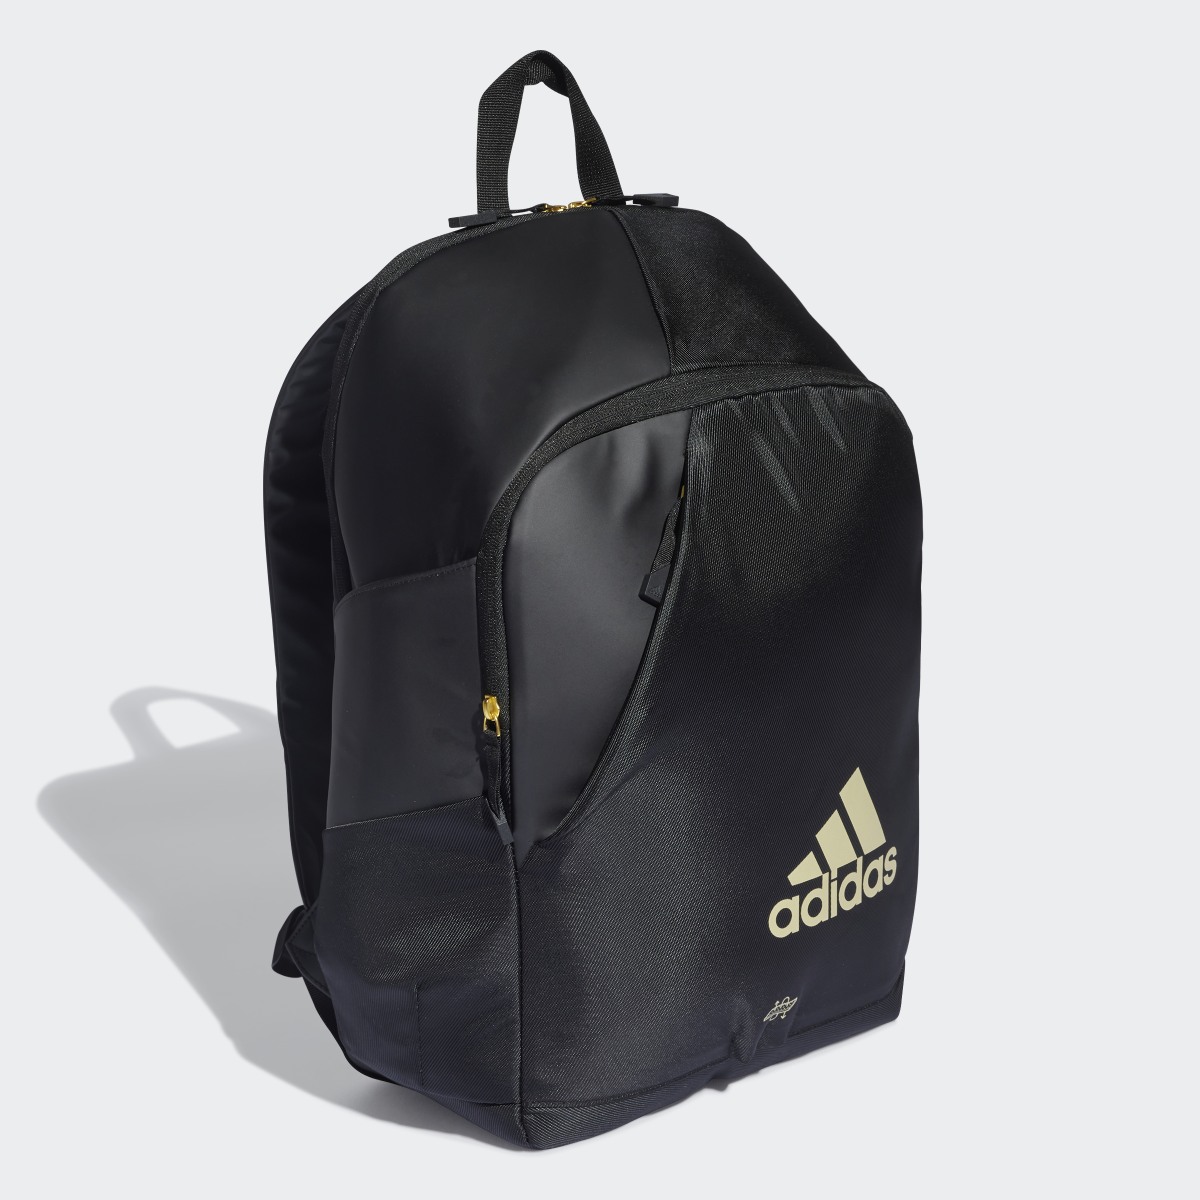 Adidas VS.6 Black/Gold Backpack. 4